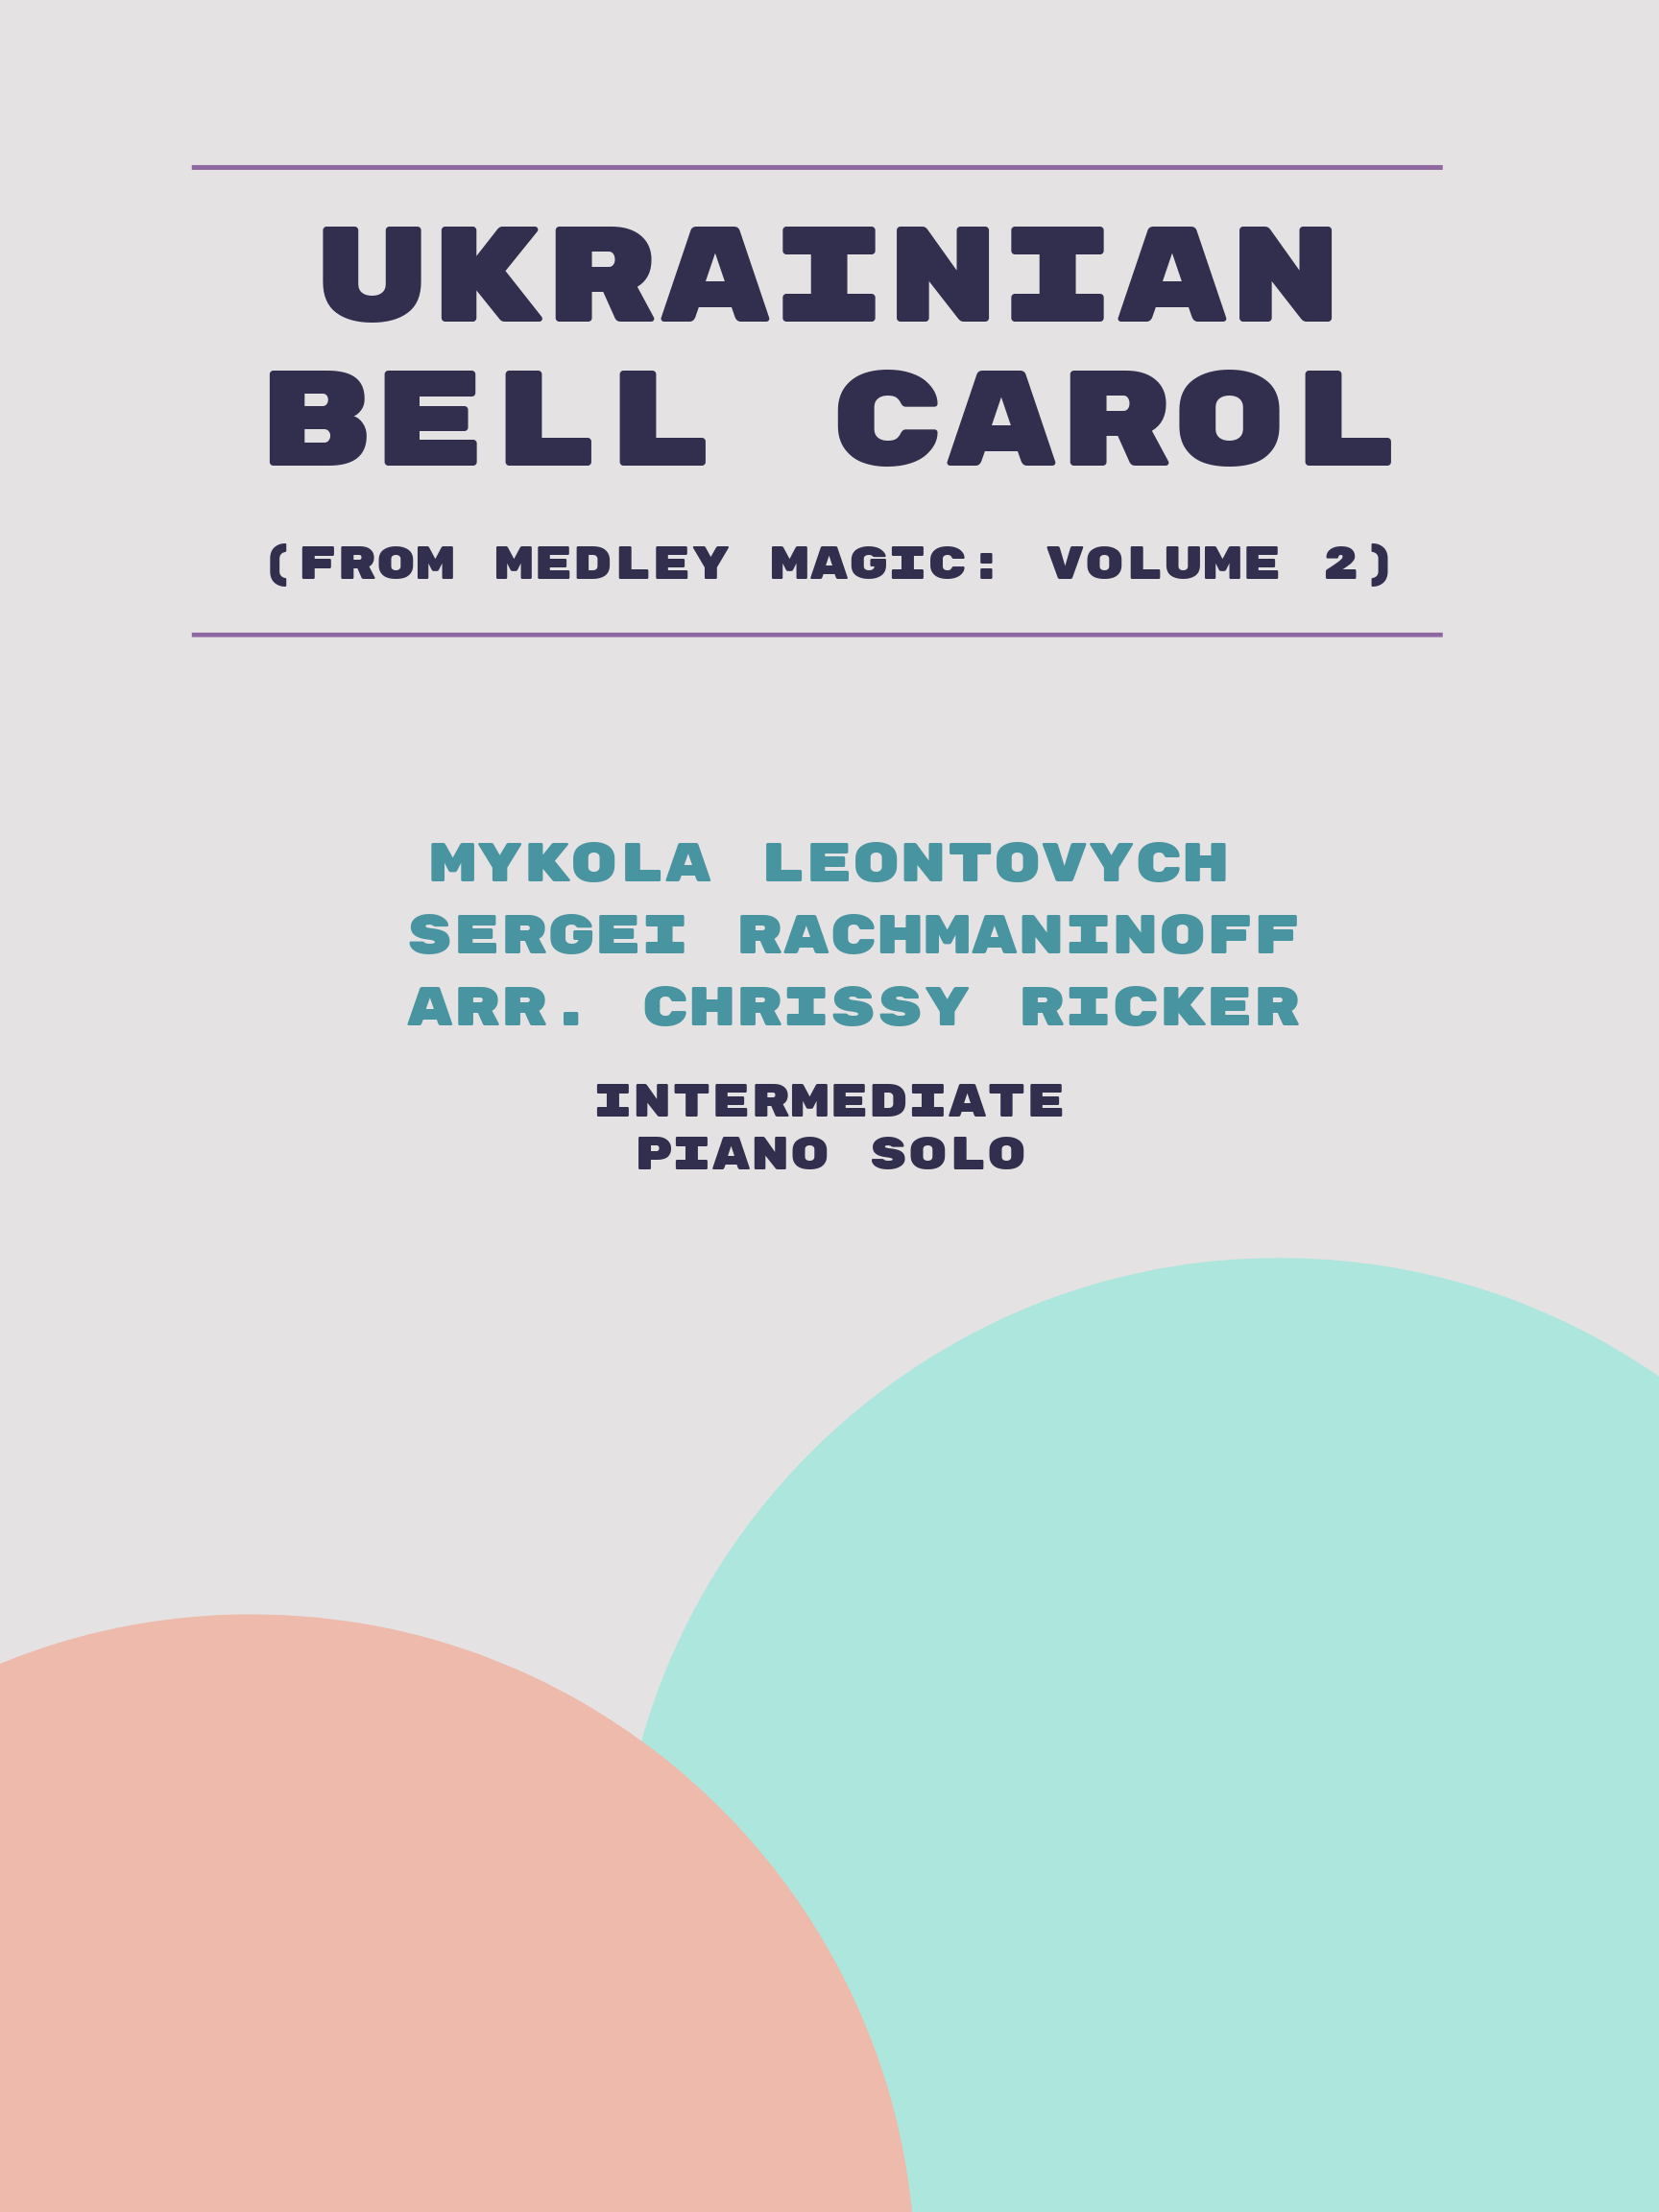 Ukrainian Bell Carol by Mykola Leontovych, Sergei Rachmaninoff